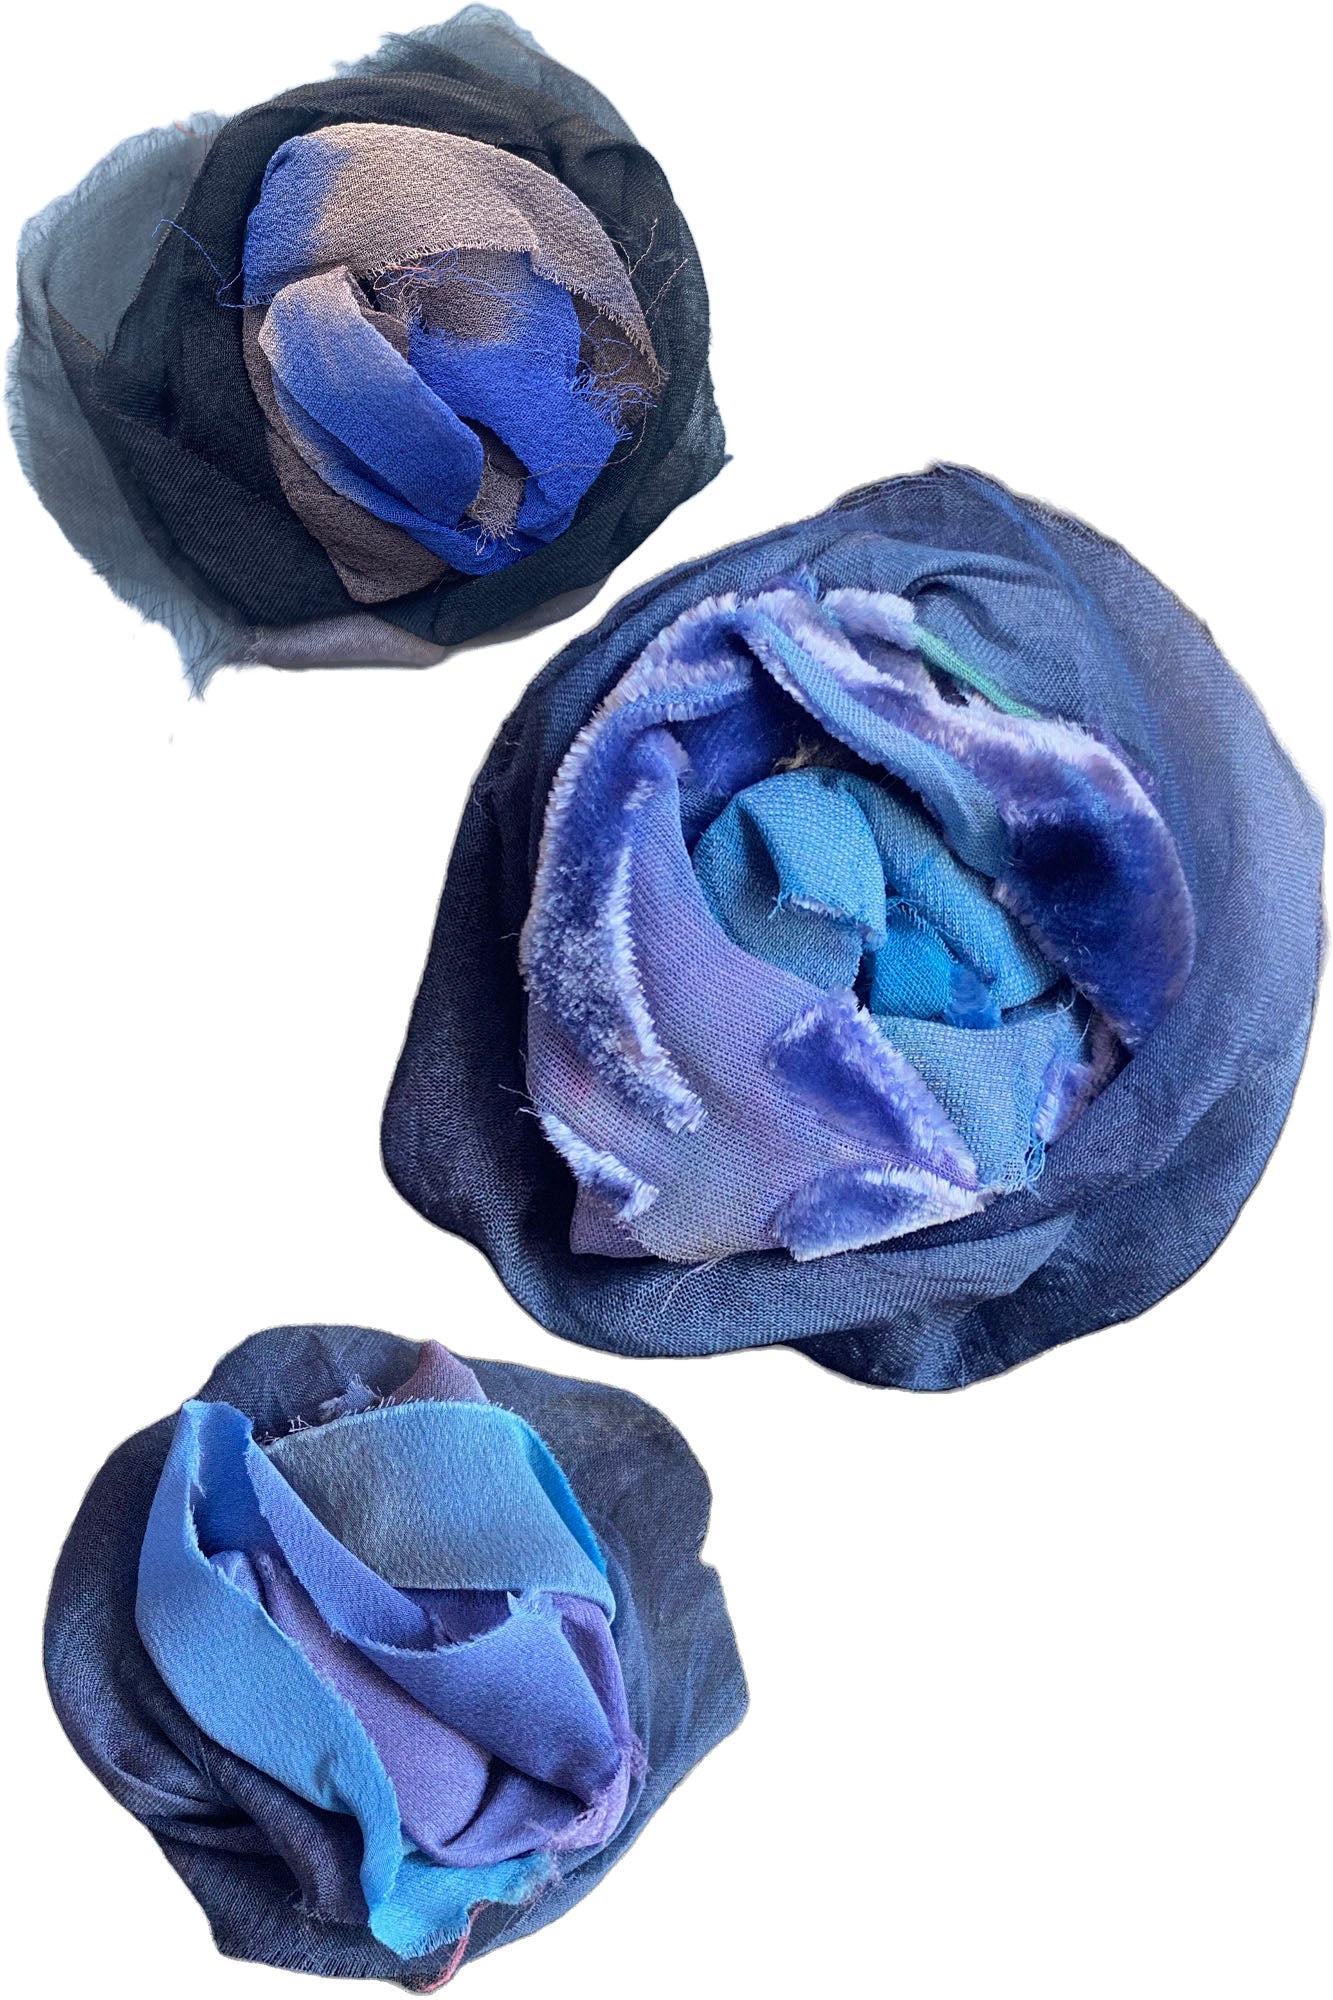 Medium Rose Magnet Brooch - Choose Color